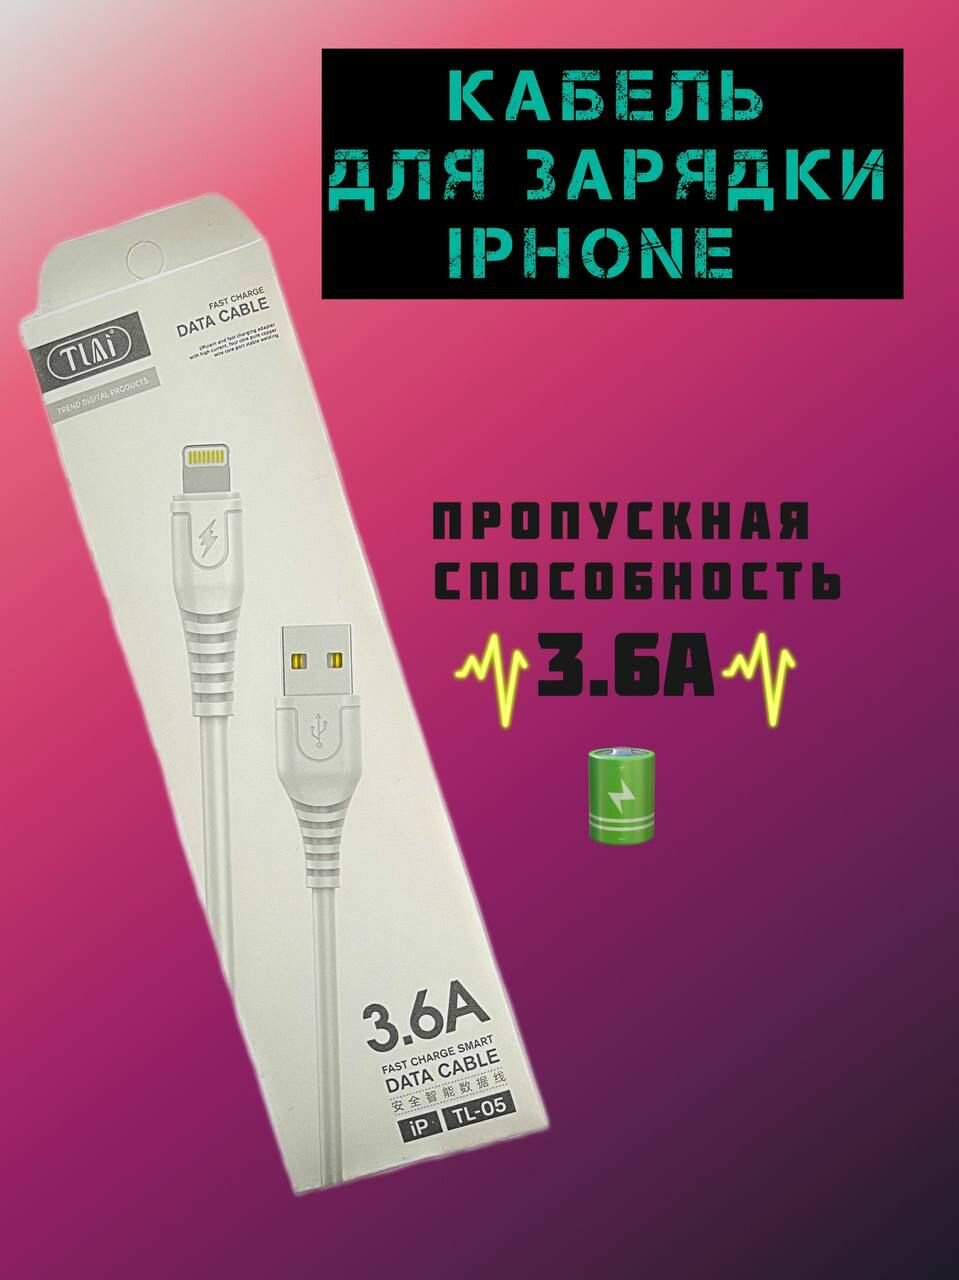 Кабель Lightning USB для зарядки iPhone. айфон / TLAi / провод / шнур